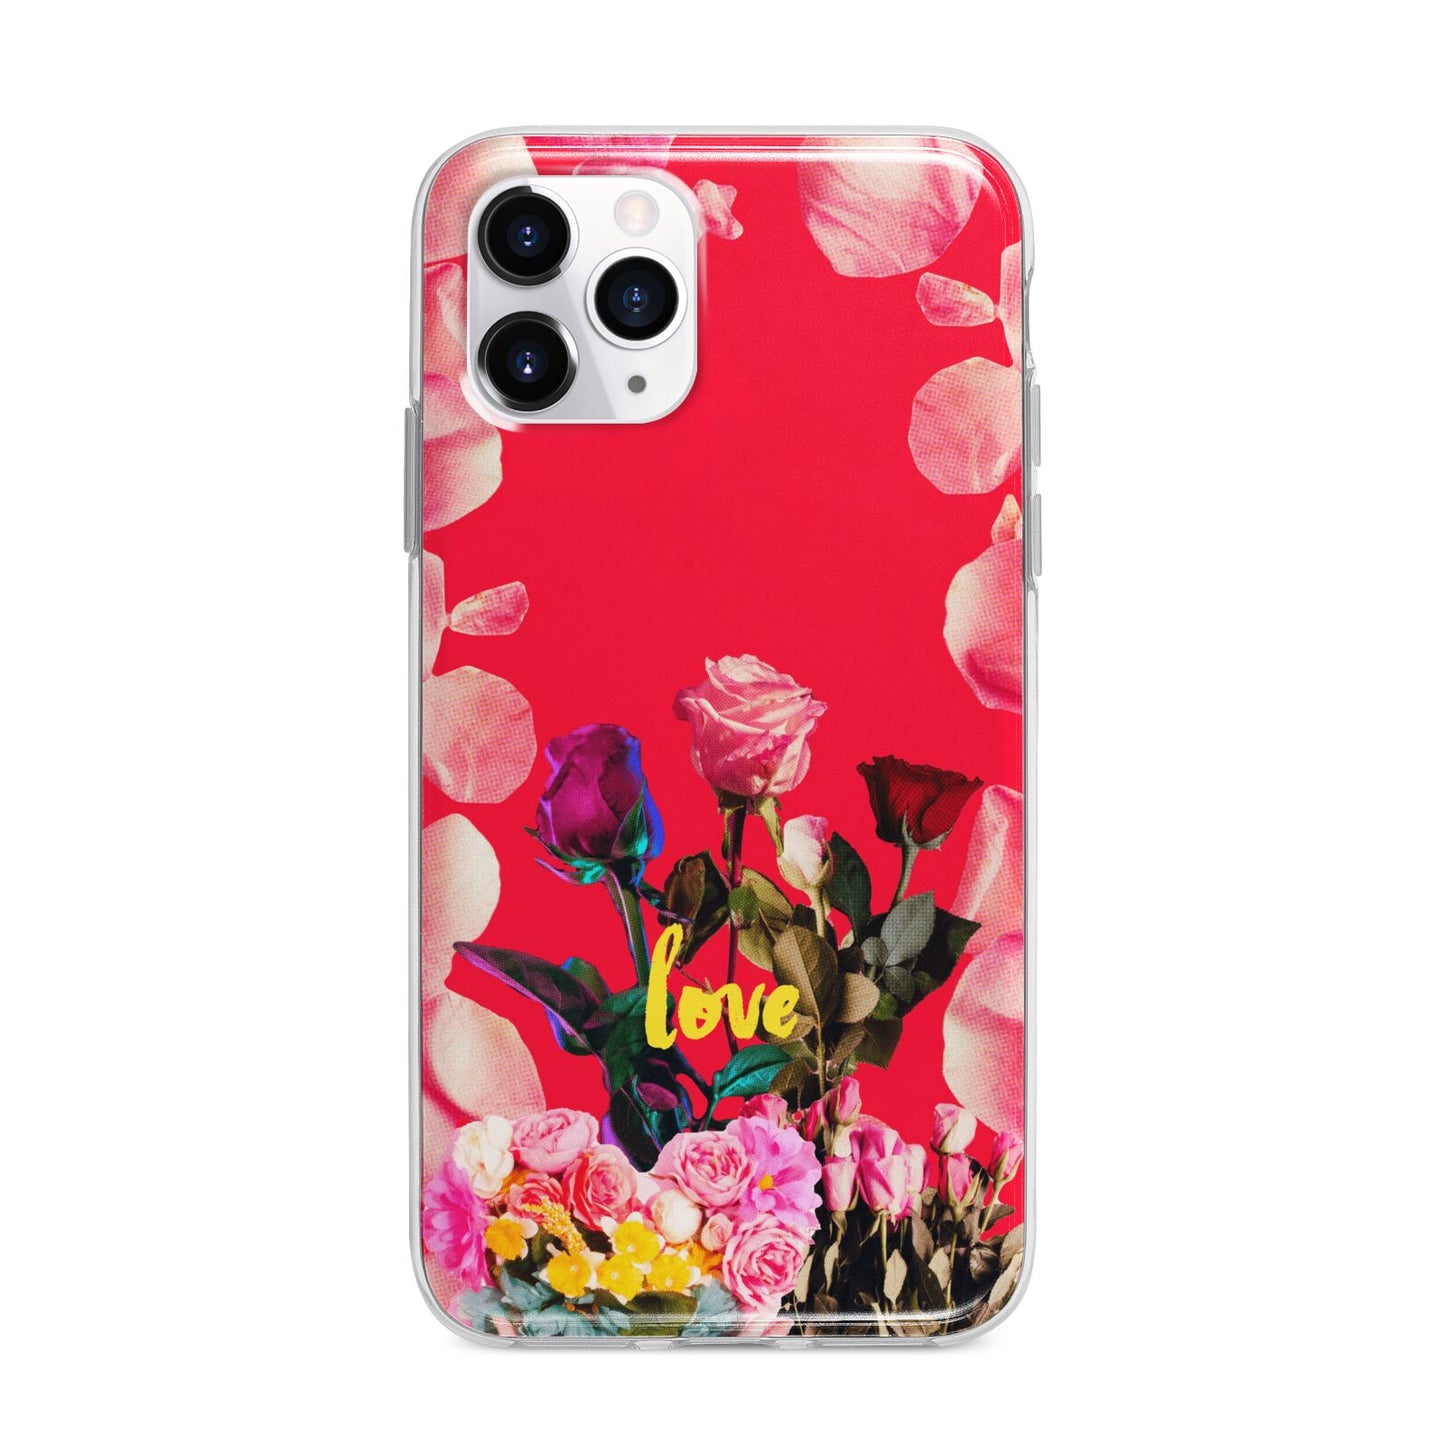 Retro Floral Valentine Apple iPhone 11 Pro Max in Silver with Bumper Case